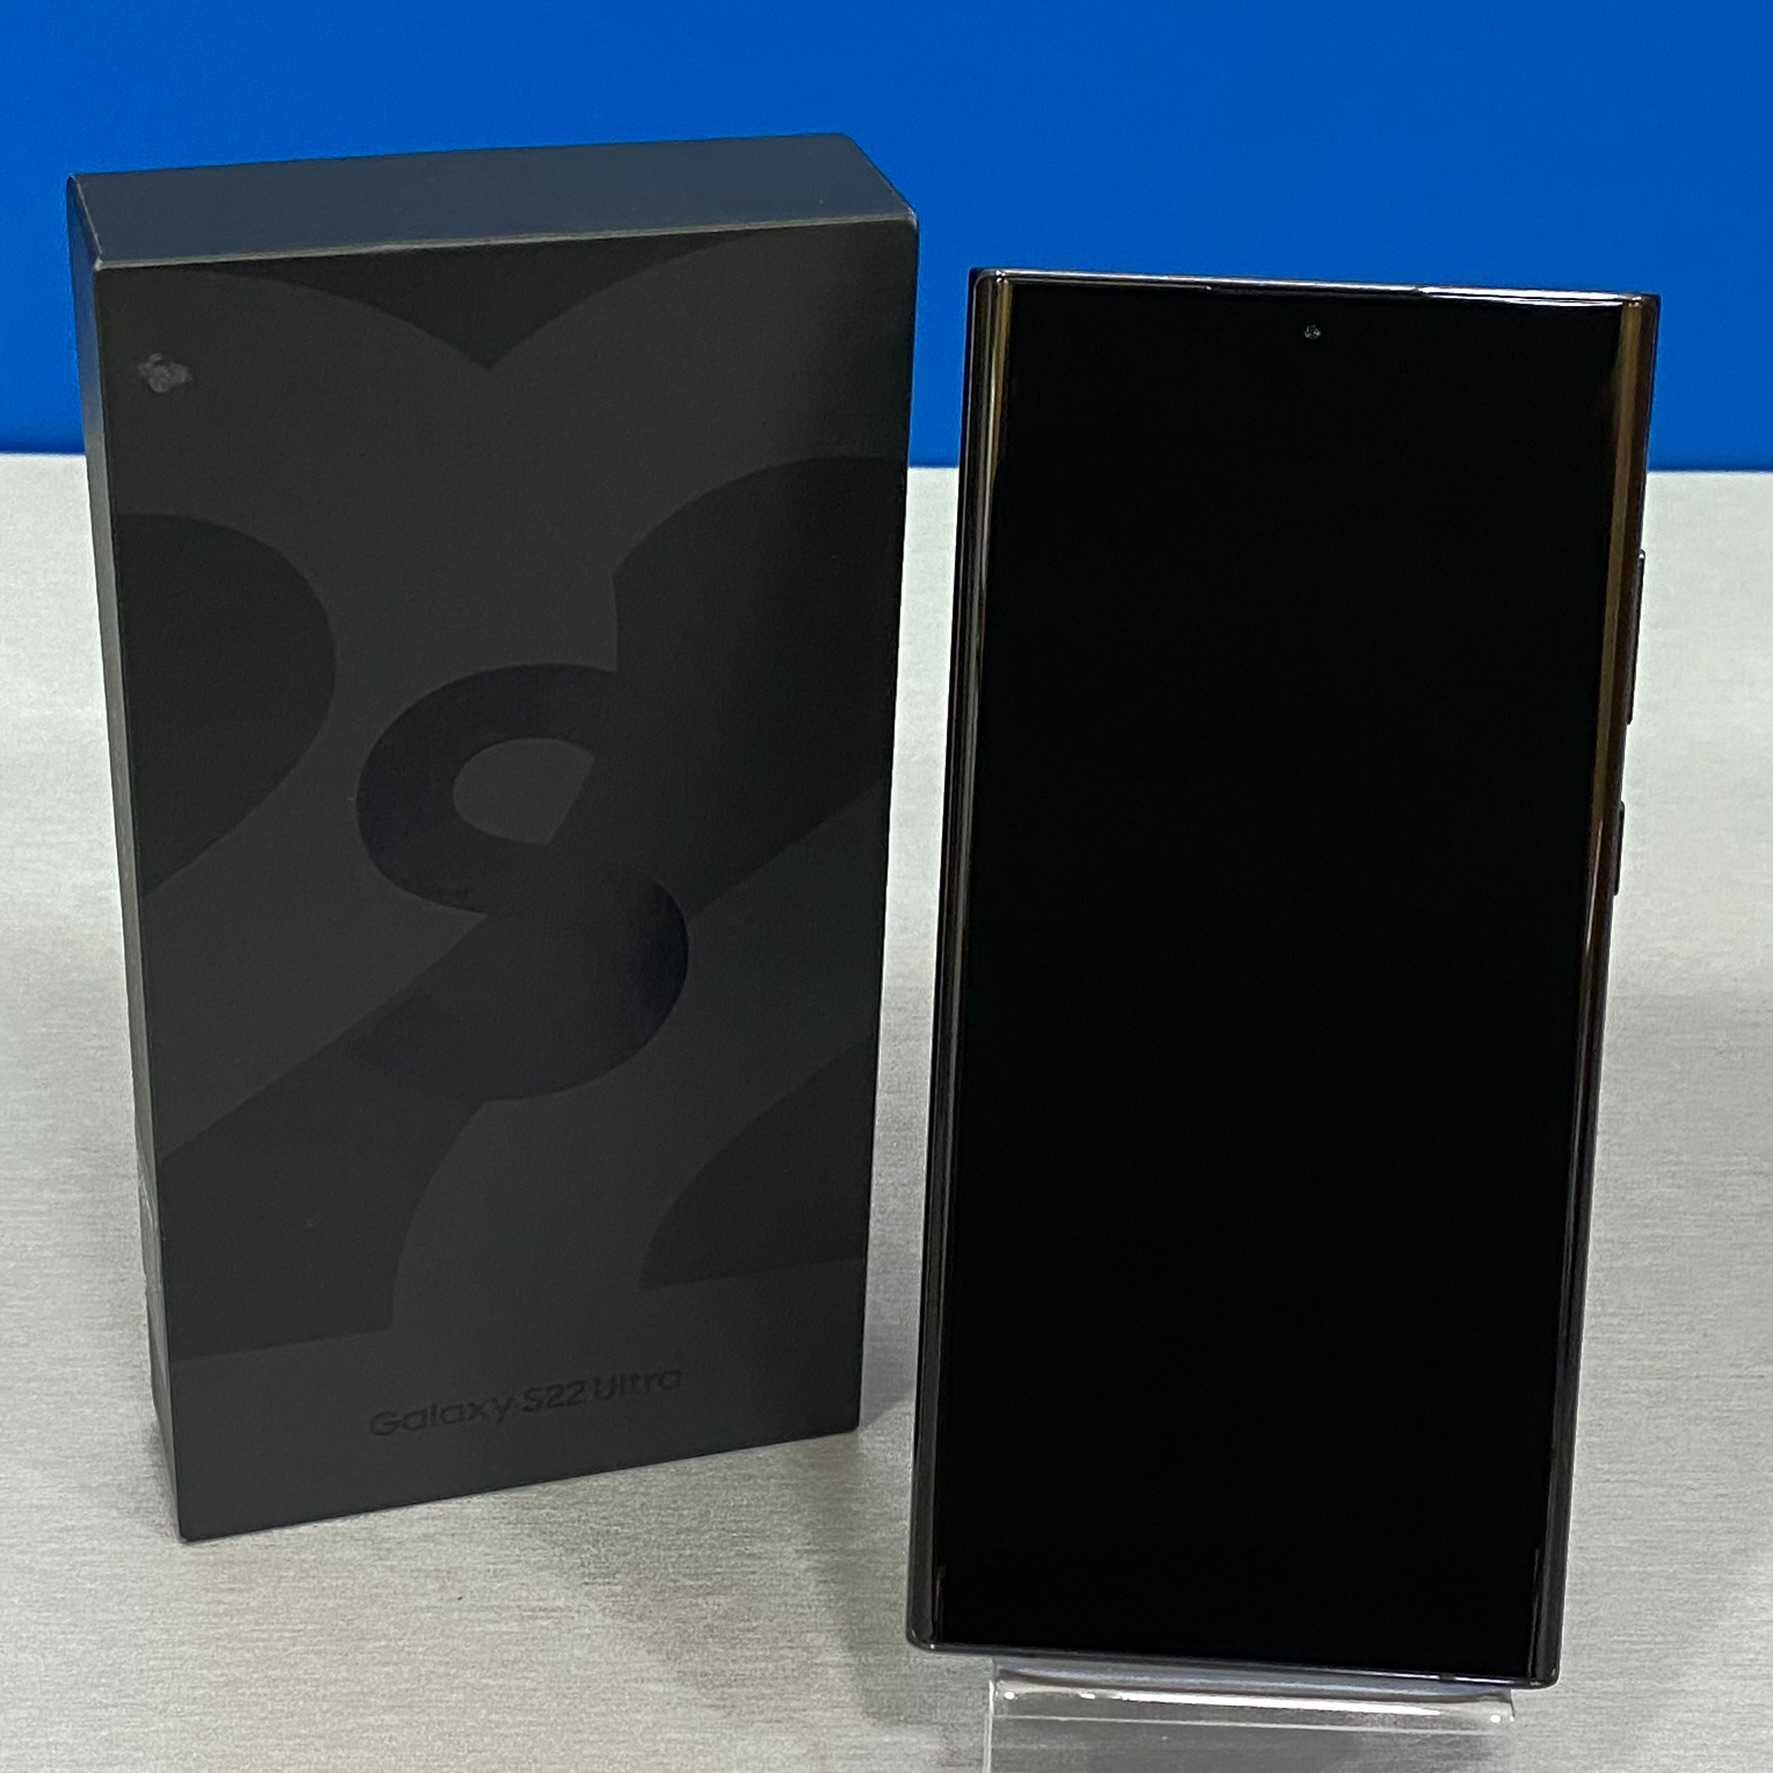 Samsung Galaxy S22 Ultra (12GB/256GB) - Black